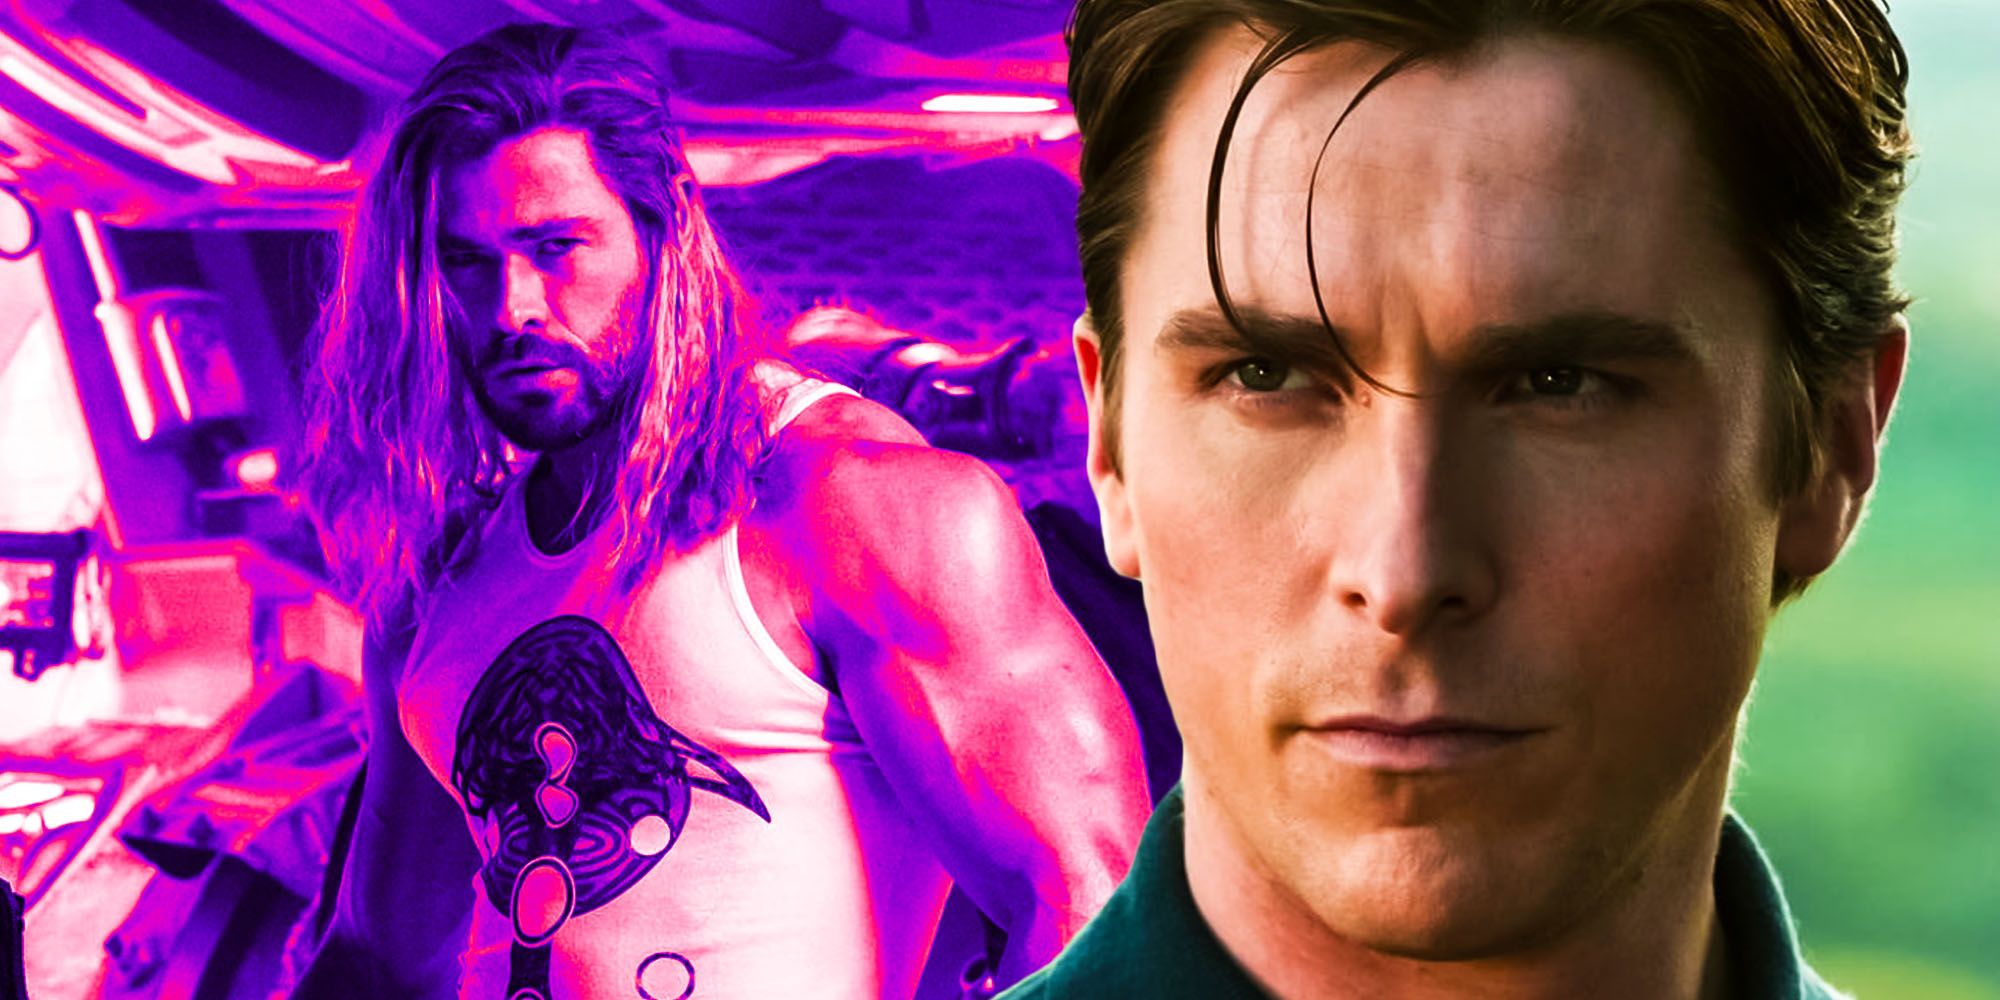 Christian Bale Batman begins Chris hemsworth Thor love and thunder same mistake